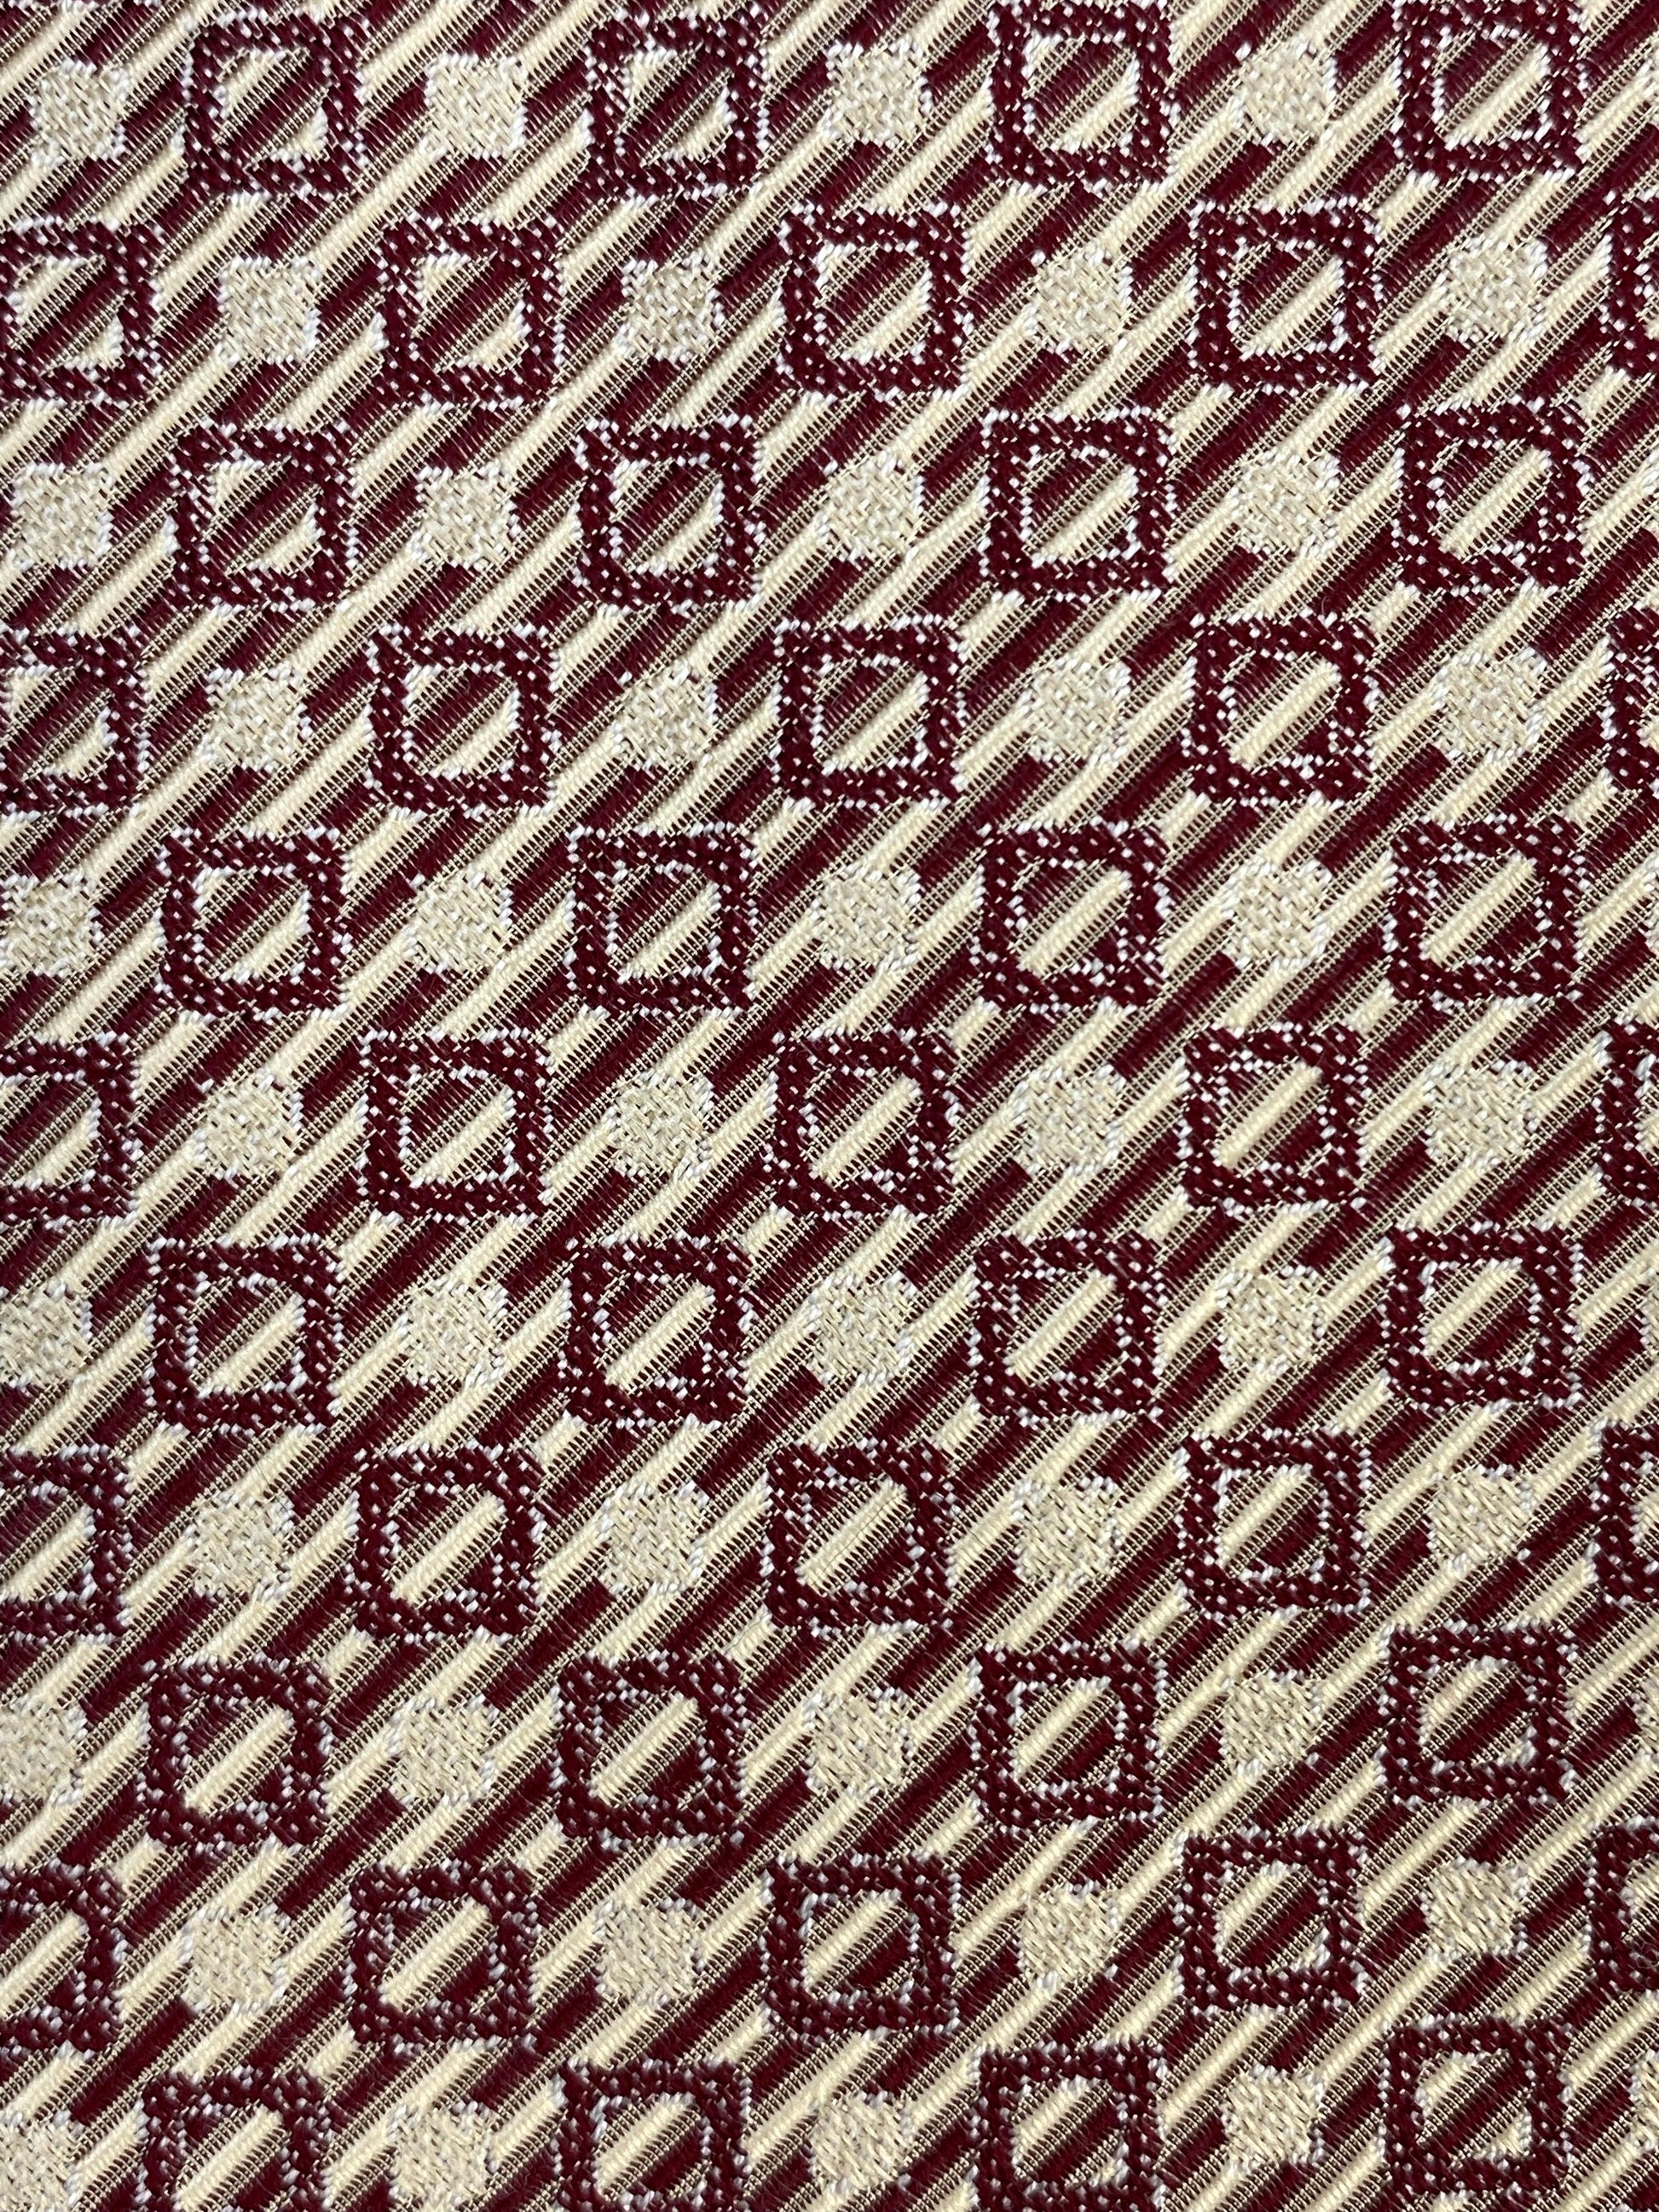 90s Deadstock Silk Necktie, Vintage Wine Geometric Square Pattern Tie, NOS